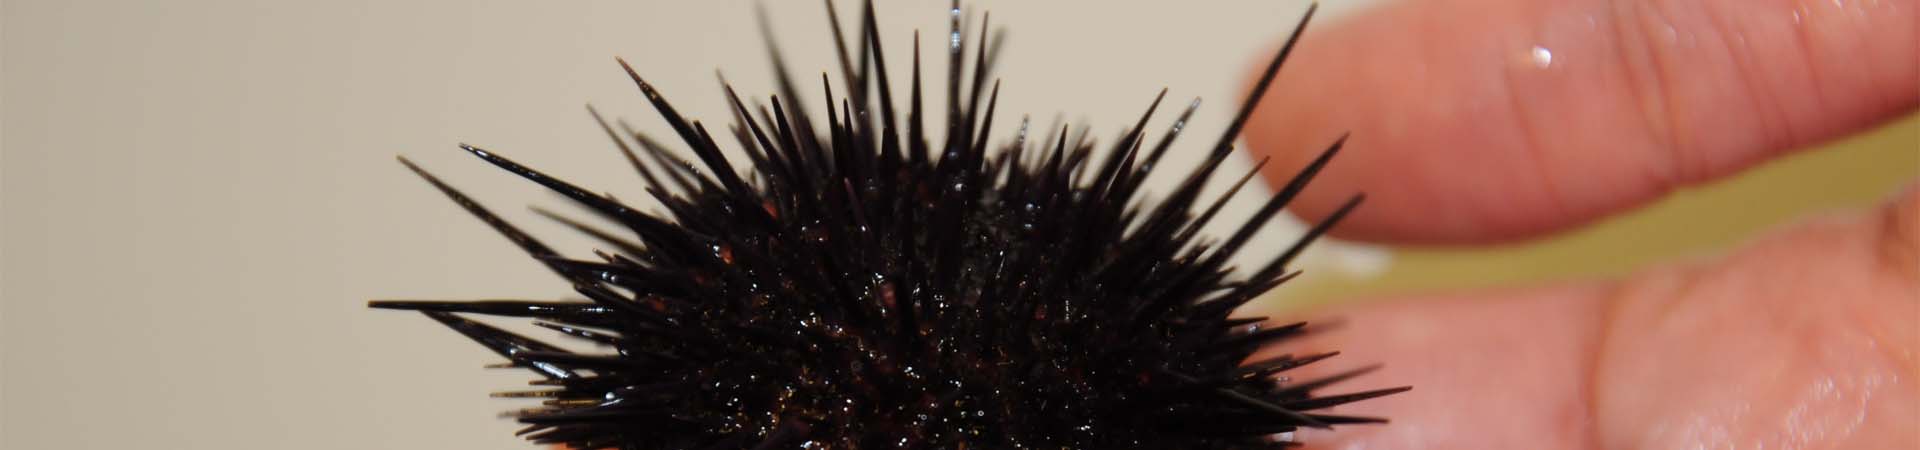 Sea urchin farmed in the SAMS aquarium